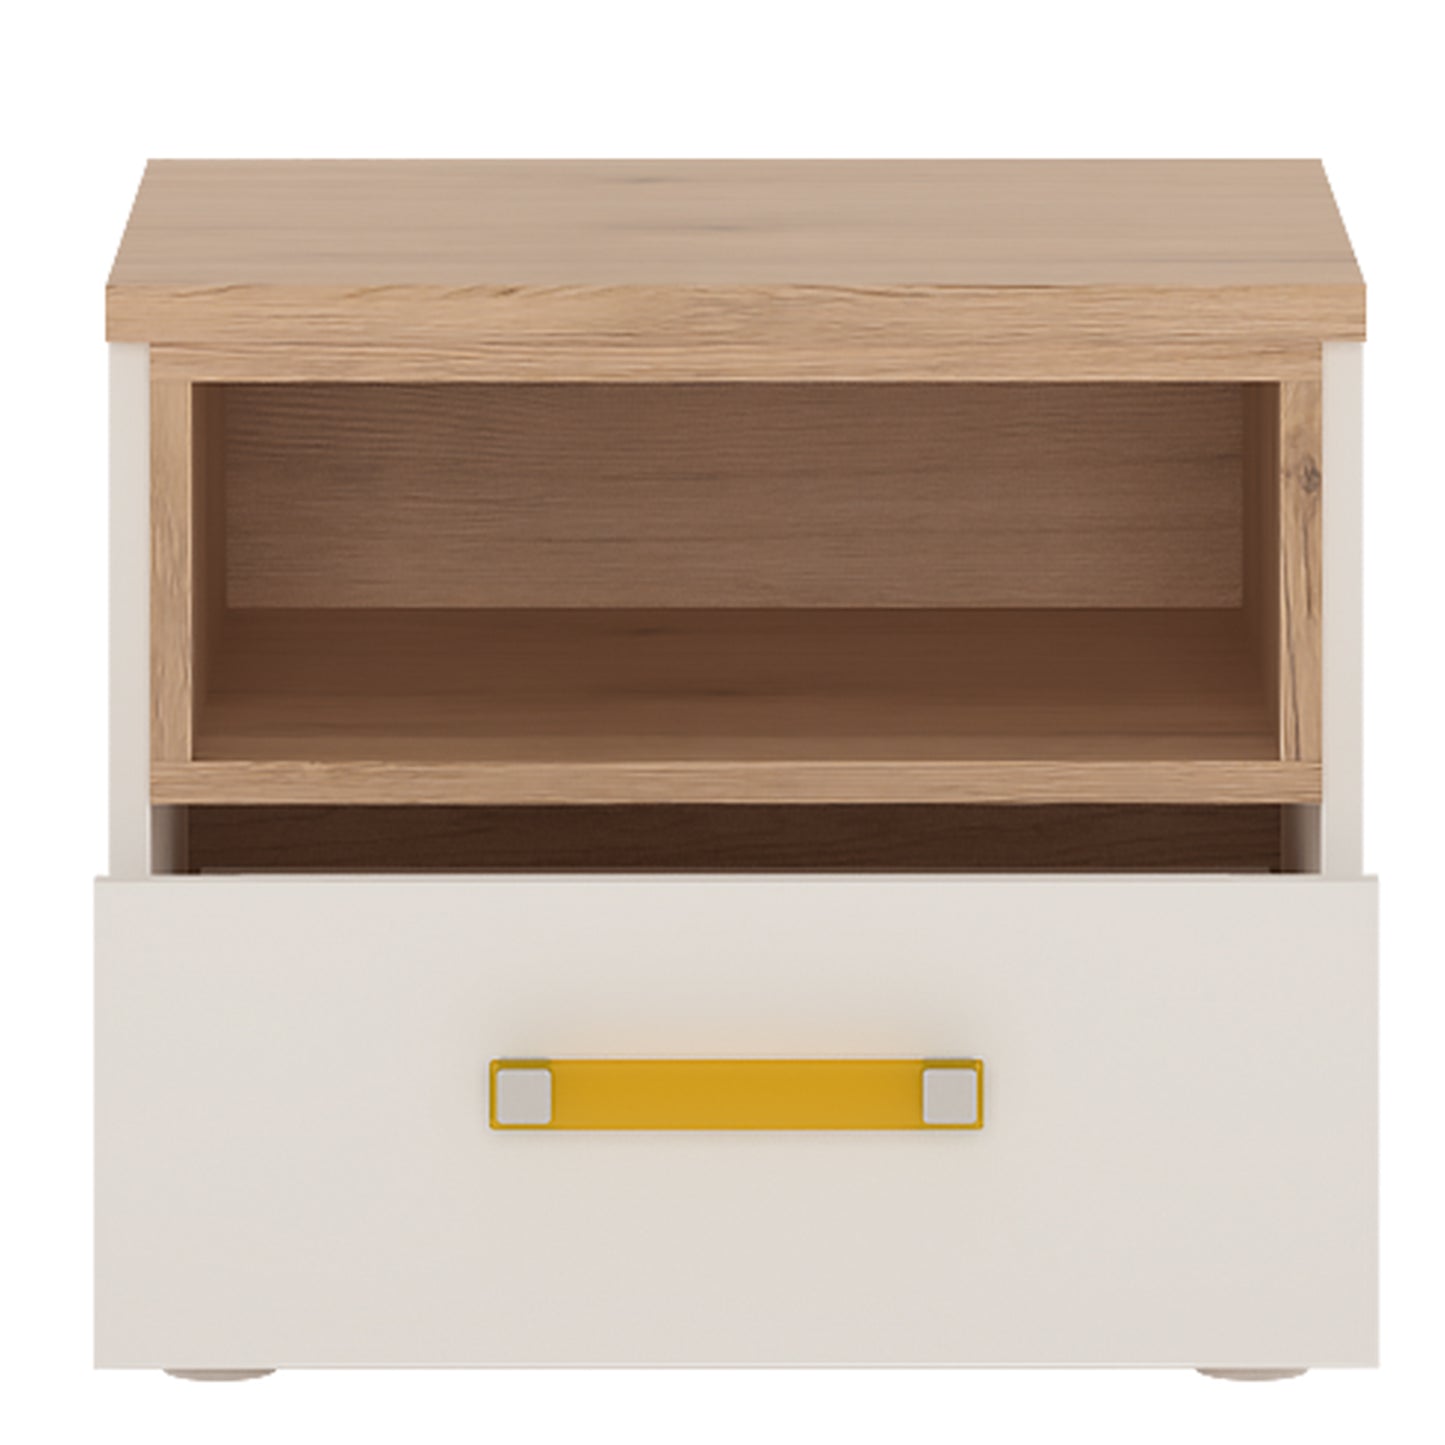 4Kids  1 Drawer bedside Cabinet in Light Oak and white High Gloss (orange handles)